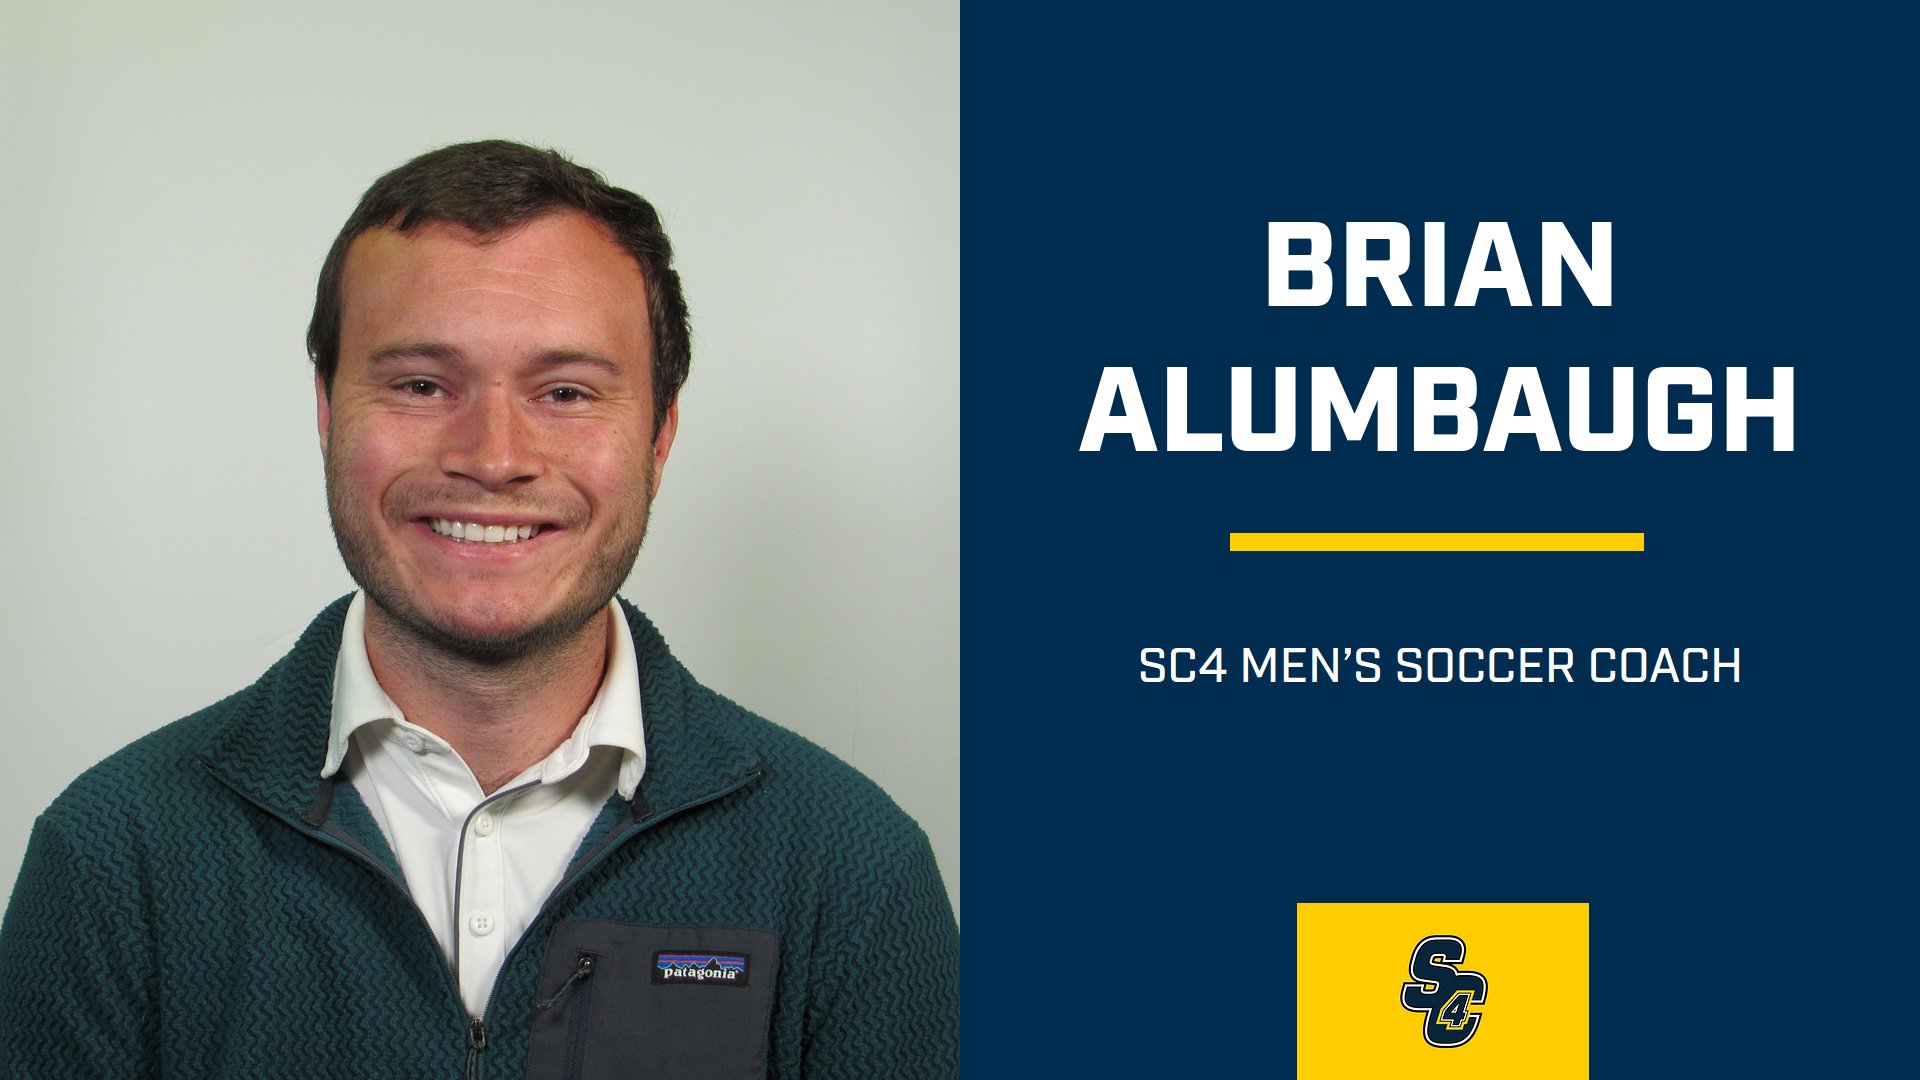 Brian Alumbaugh Named Inaugural Men's Soccer Coach for SC4 Skippers